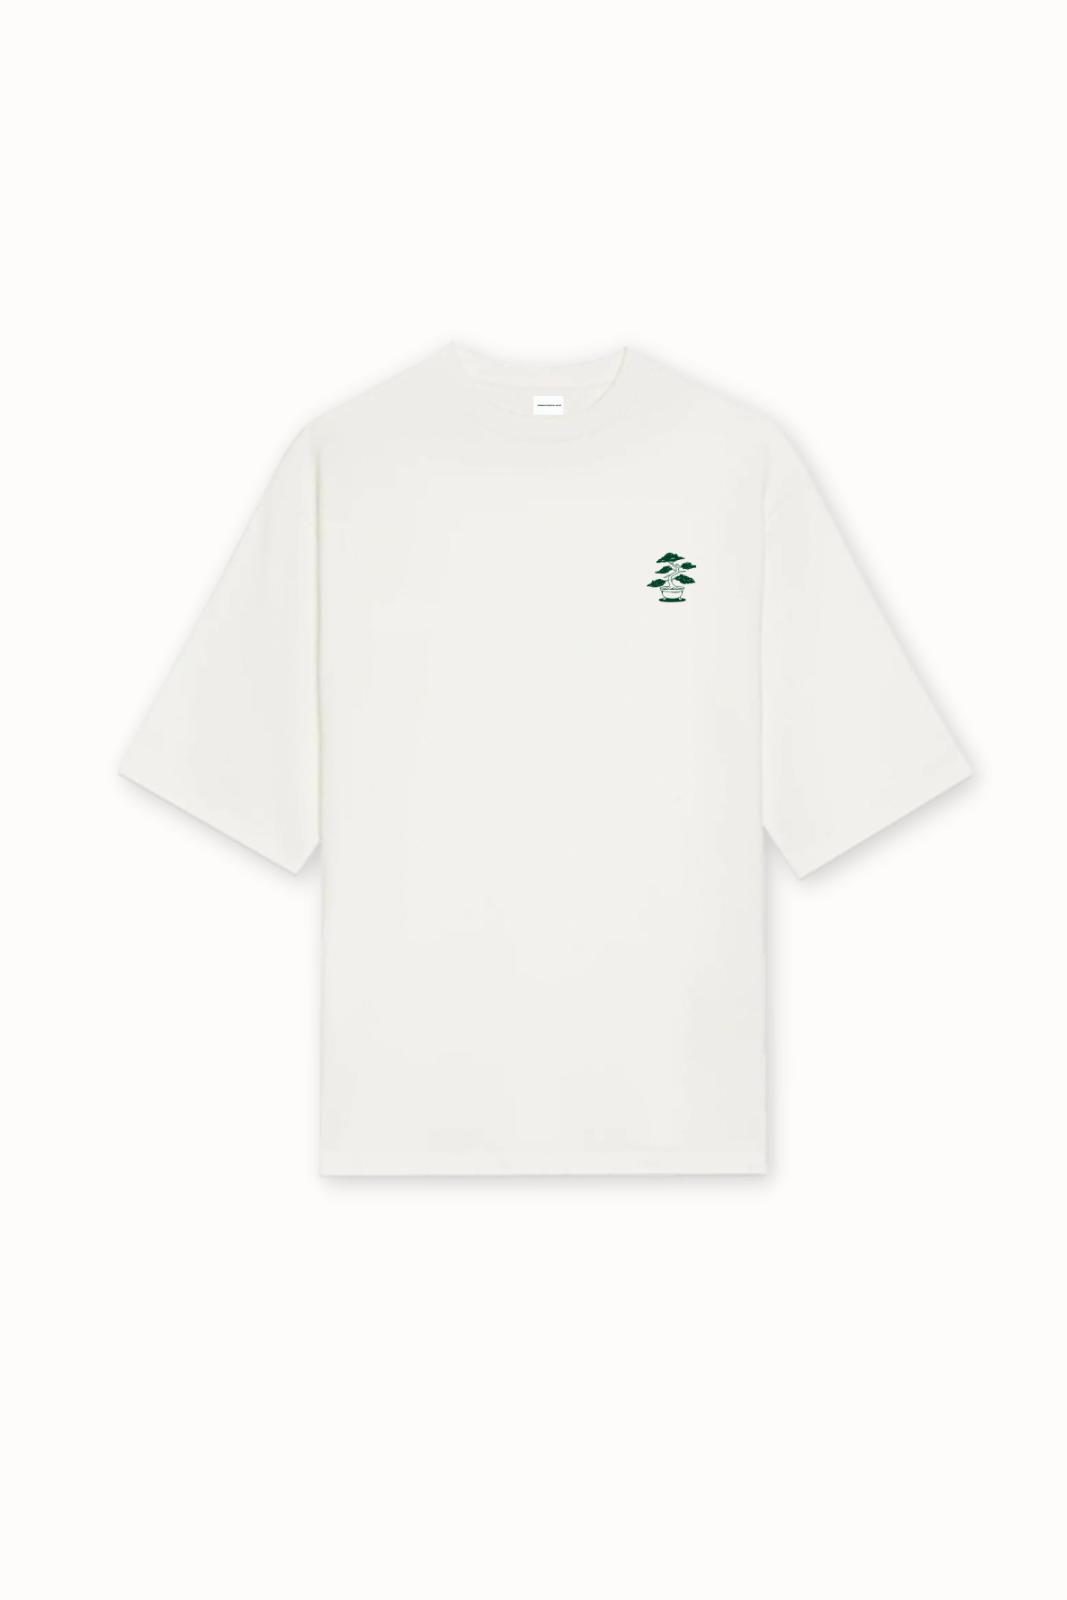 Bonsai T-Shirt